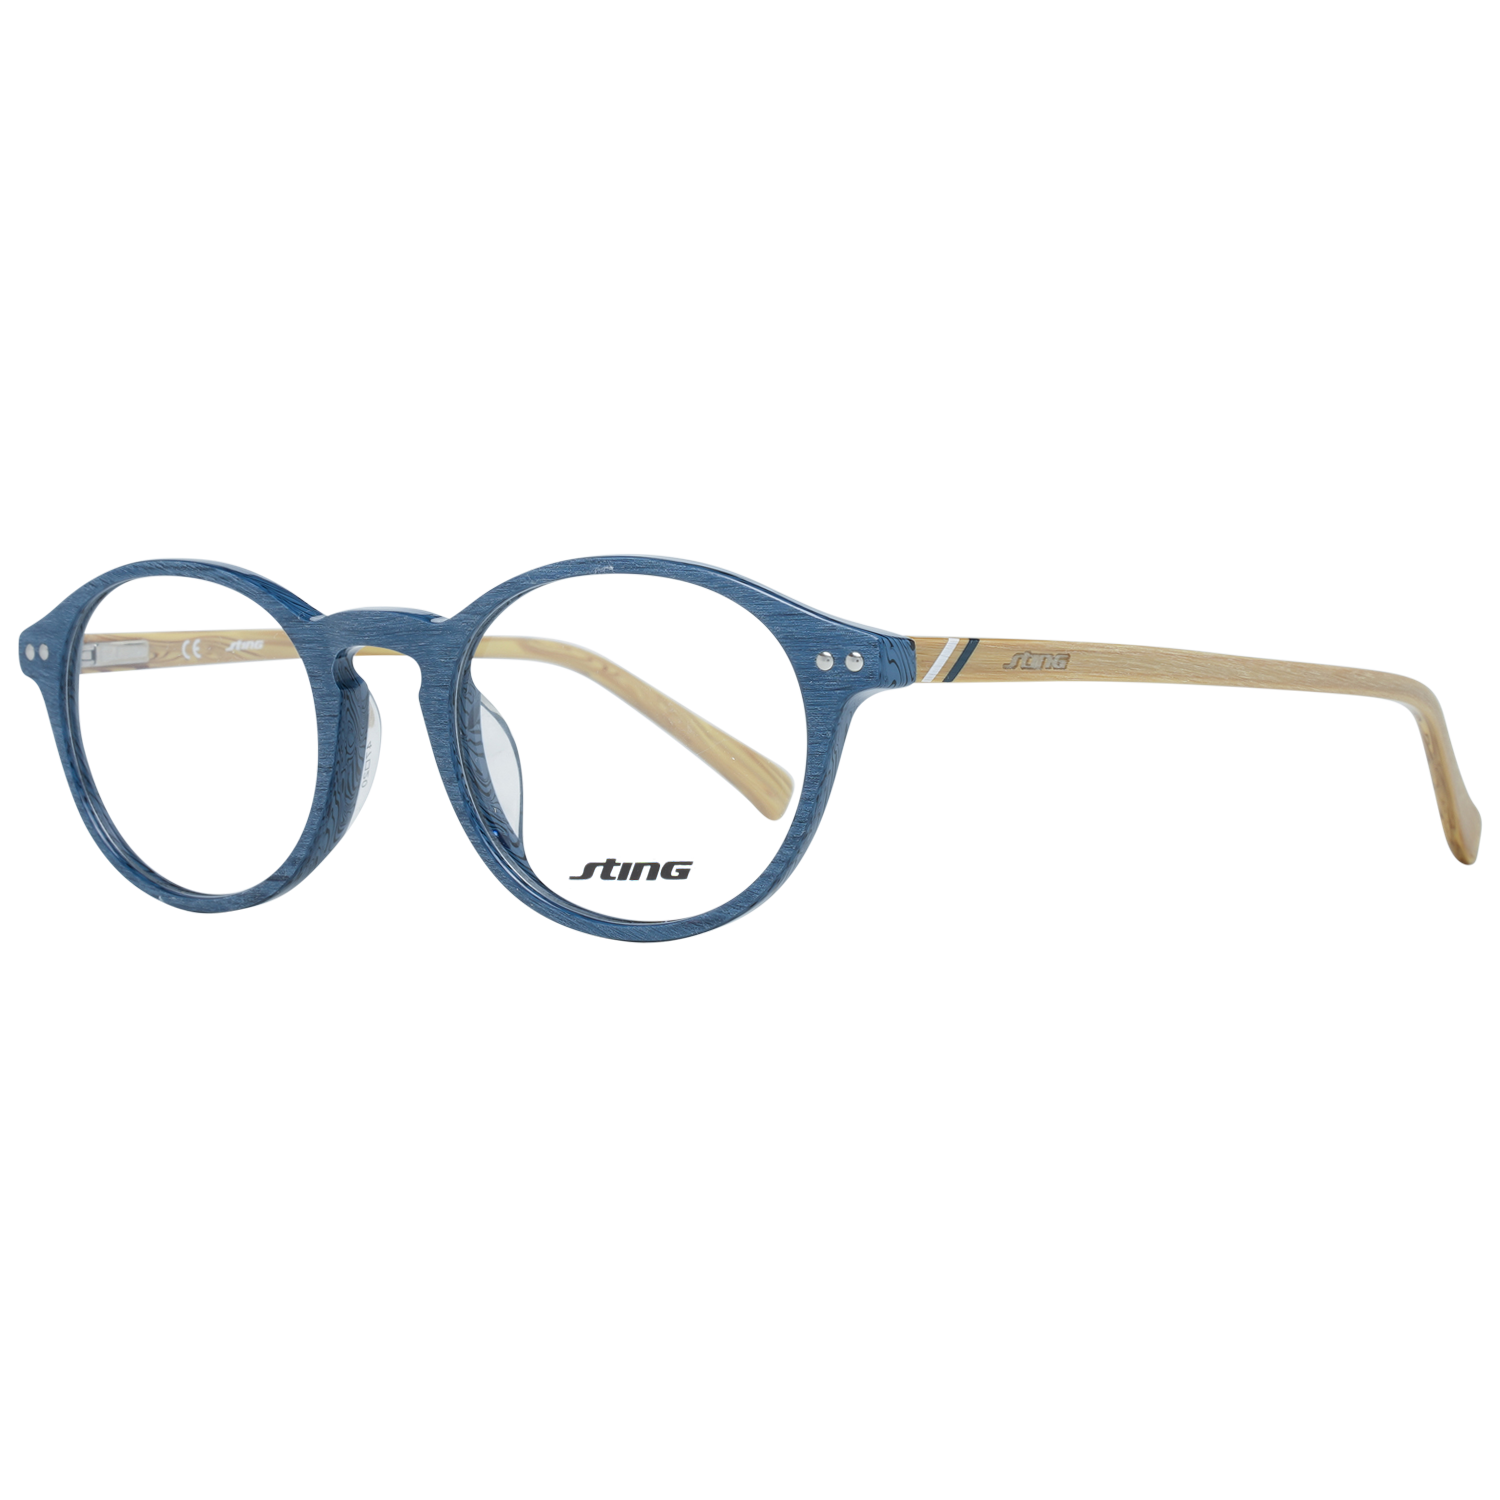 Sting Frames Sting Optical Frame VST6527 0AR4 47 Eyeglasses Eyewear UK USA Australia 